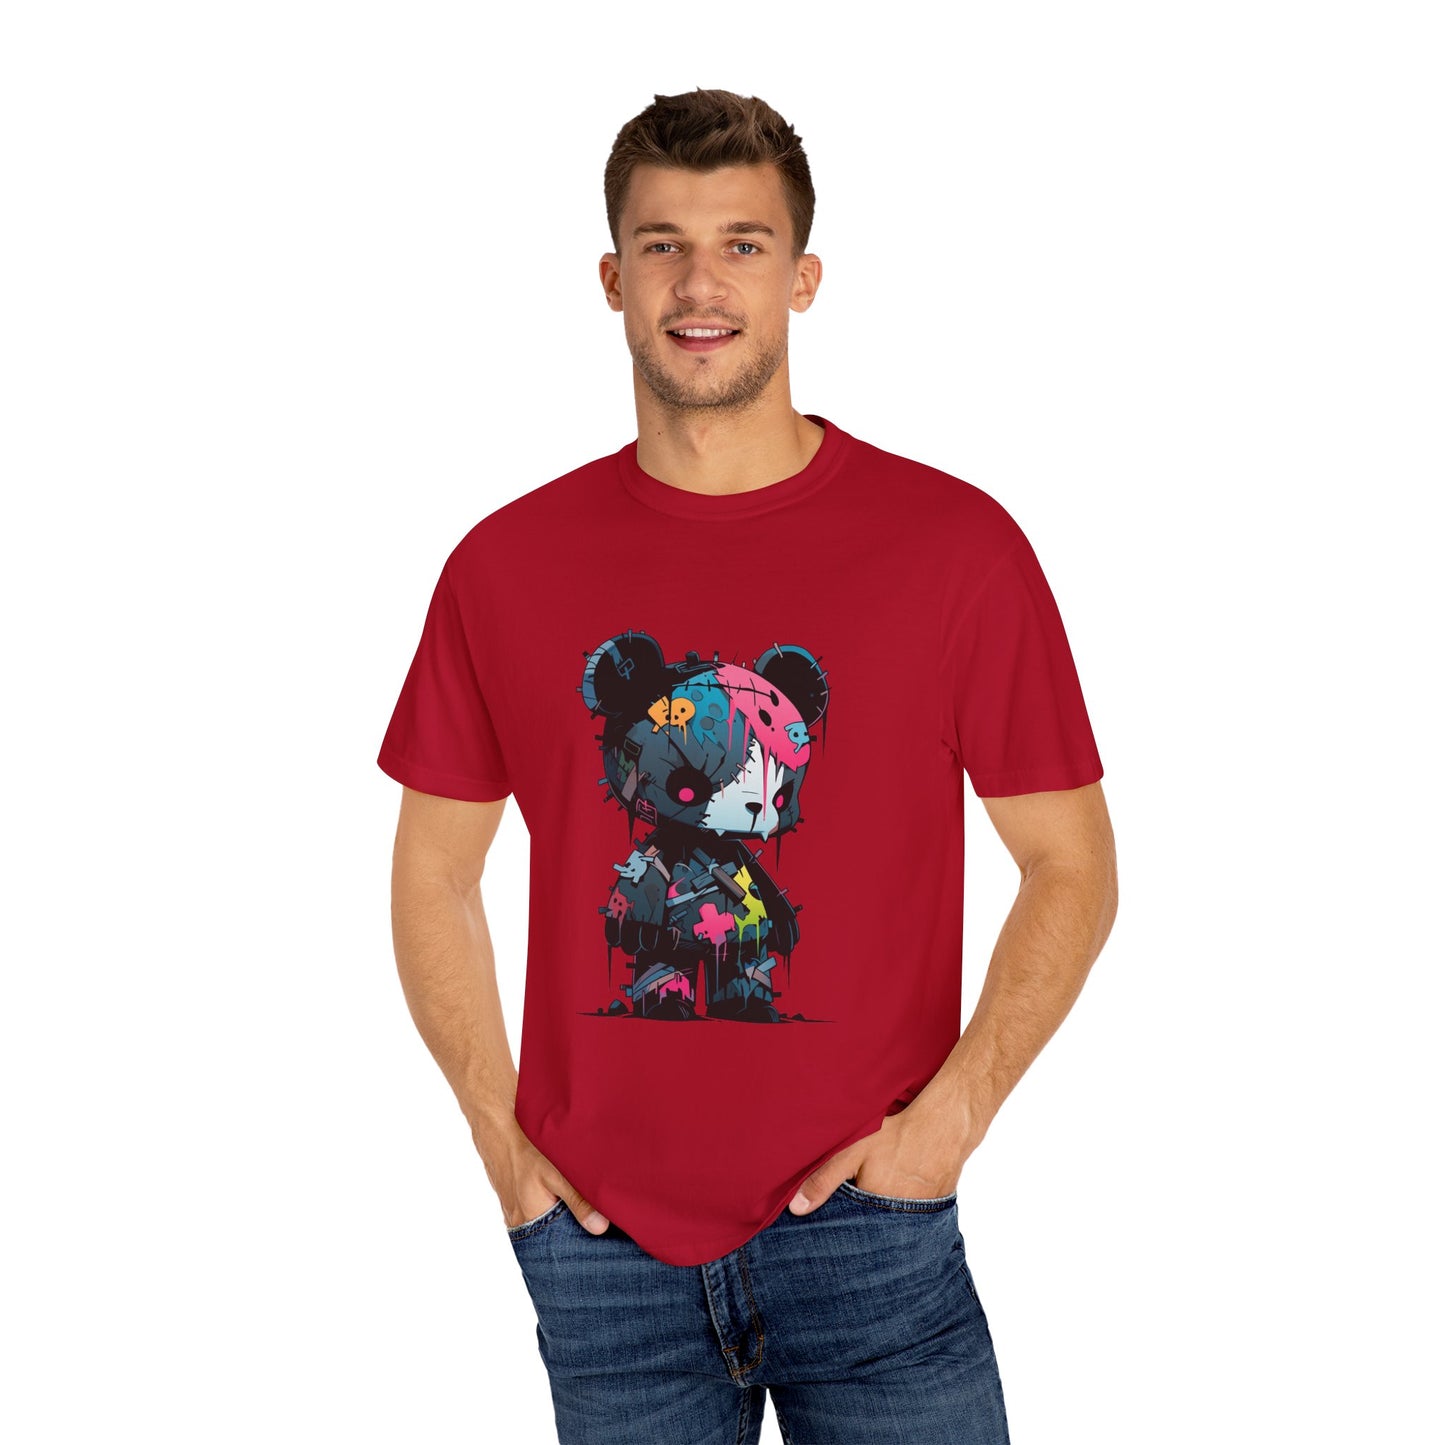 Hip Hop Teddy Bear Graphic Unisex Garment-dyed T-shirt Cotton Funny Humorous Graphic Soft Premium Unisex Men Women Red T-shirt Birthday Gift-24